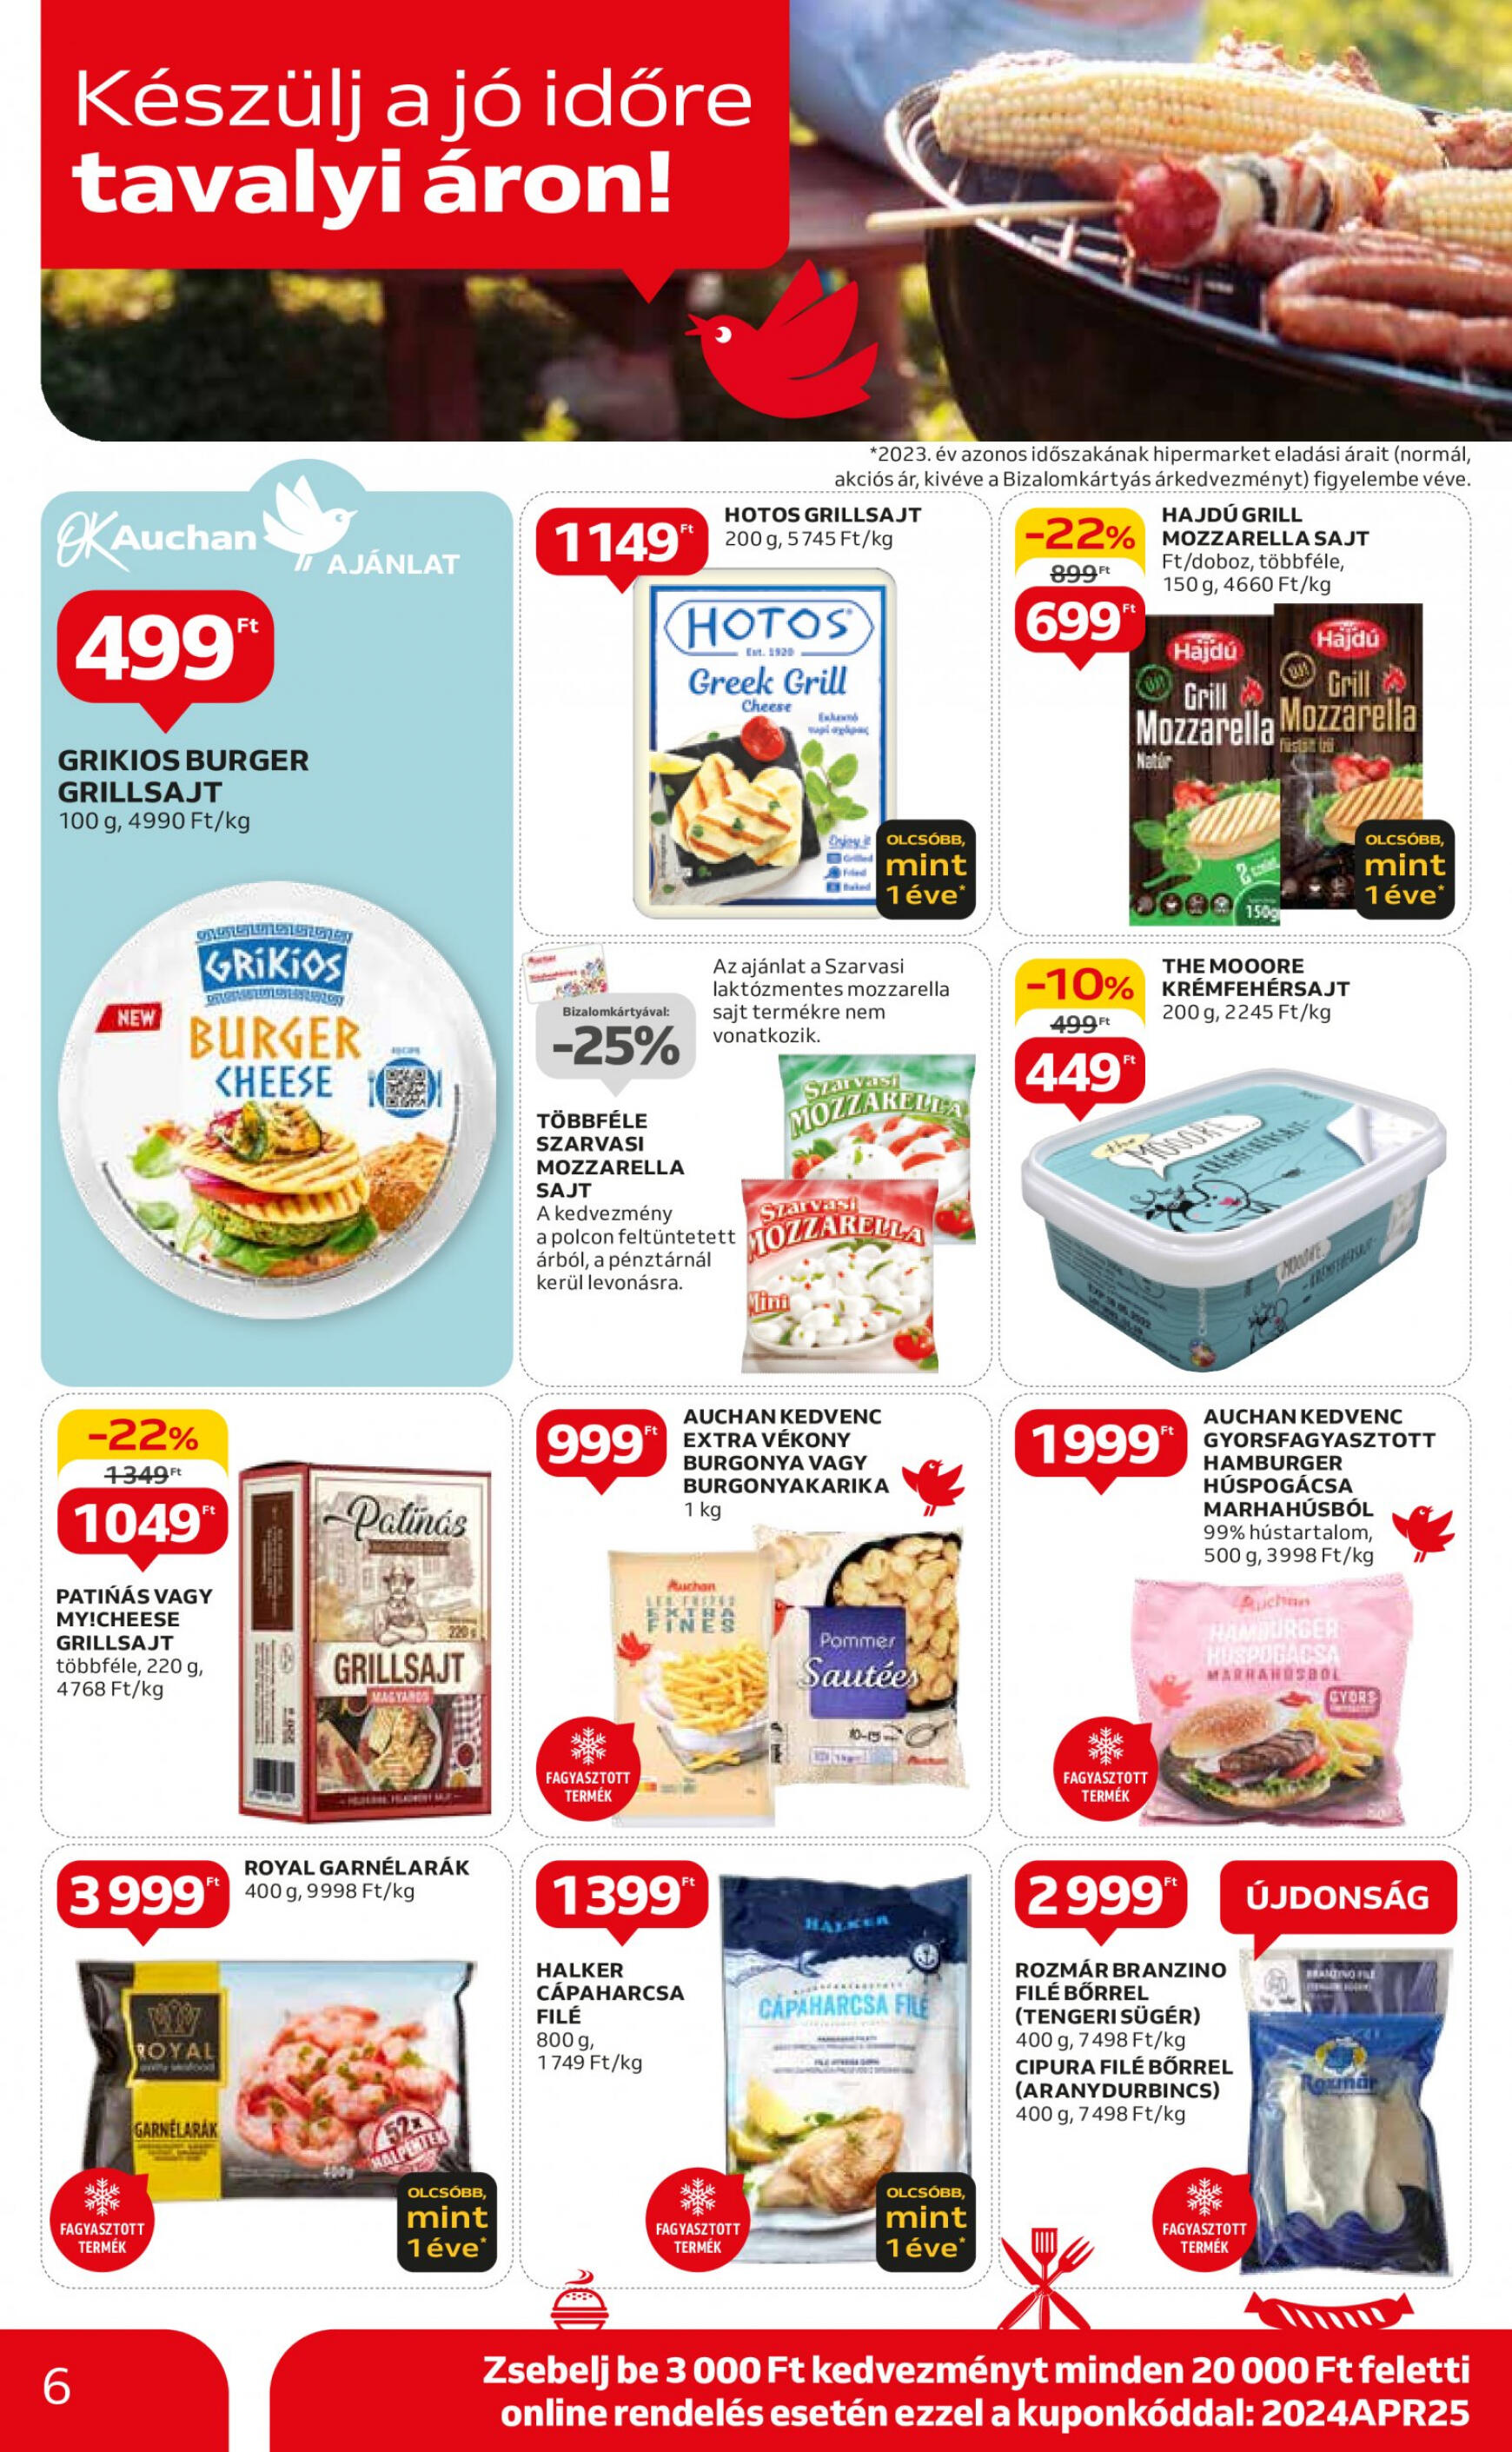 auchan - Aktuális újság Auchan 04.25. - 04.30. - page: 6